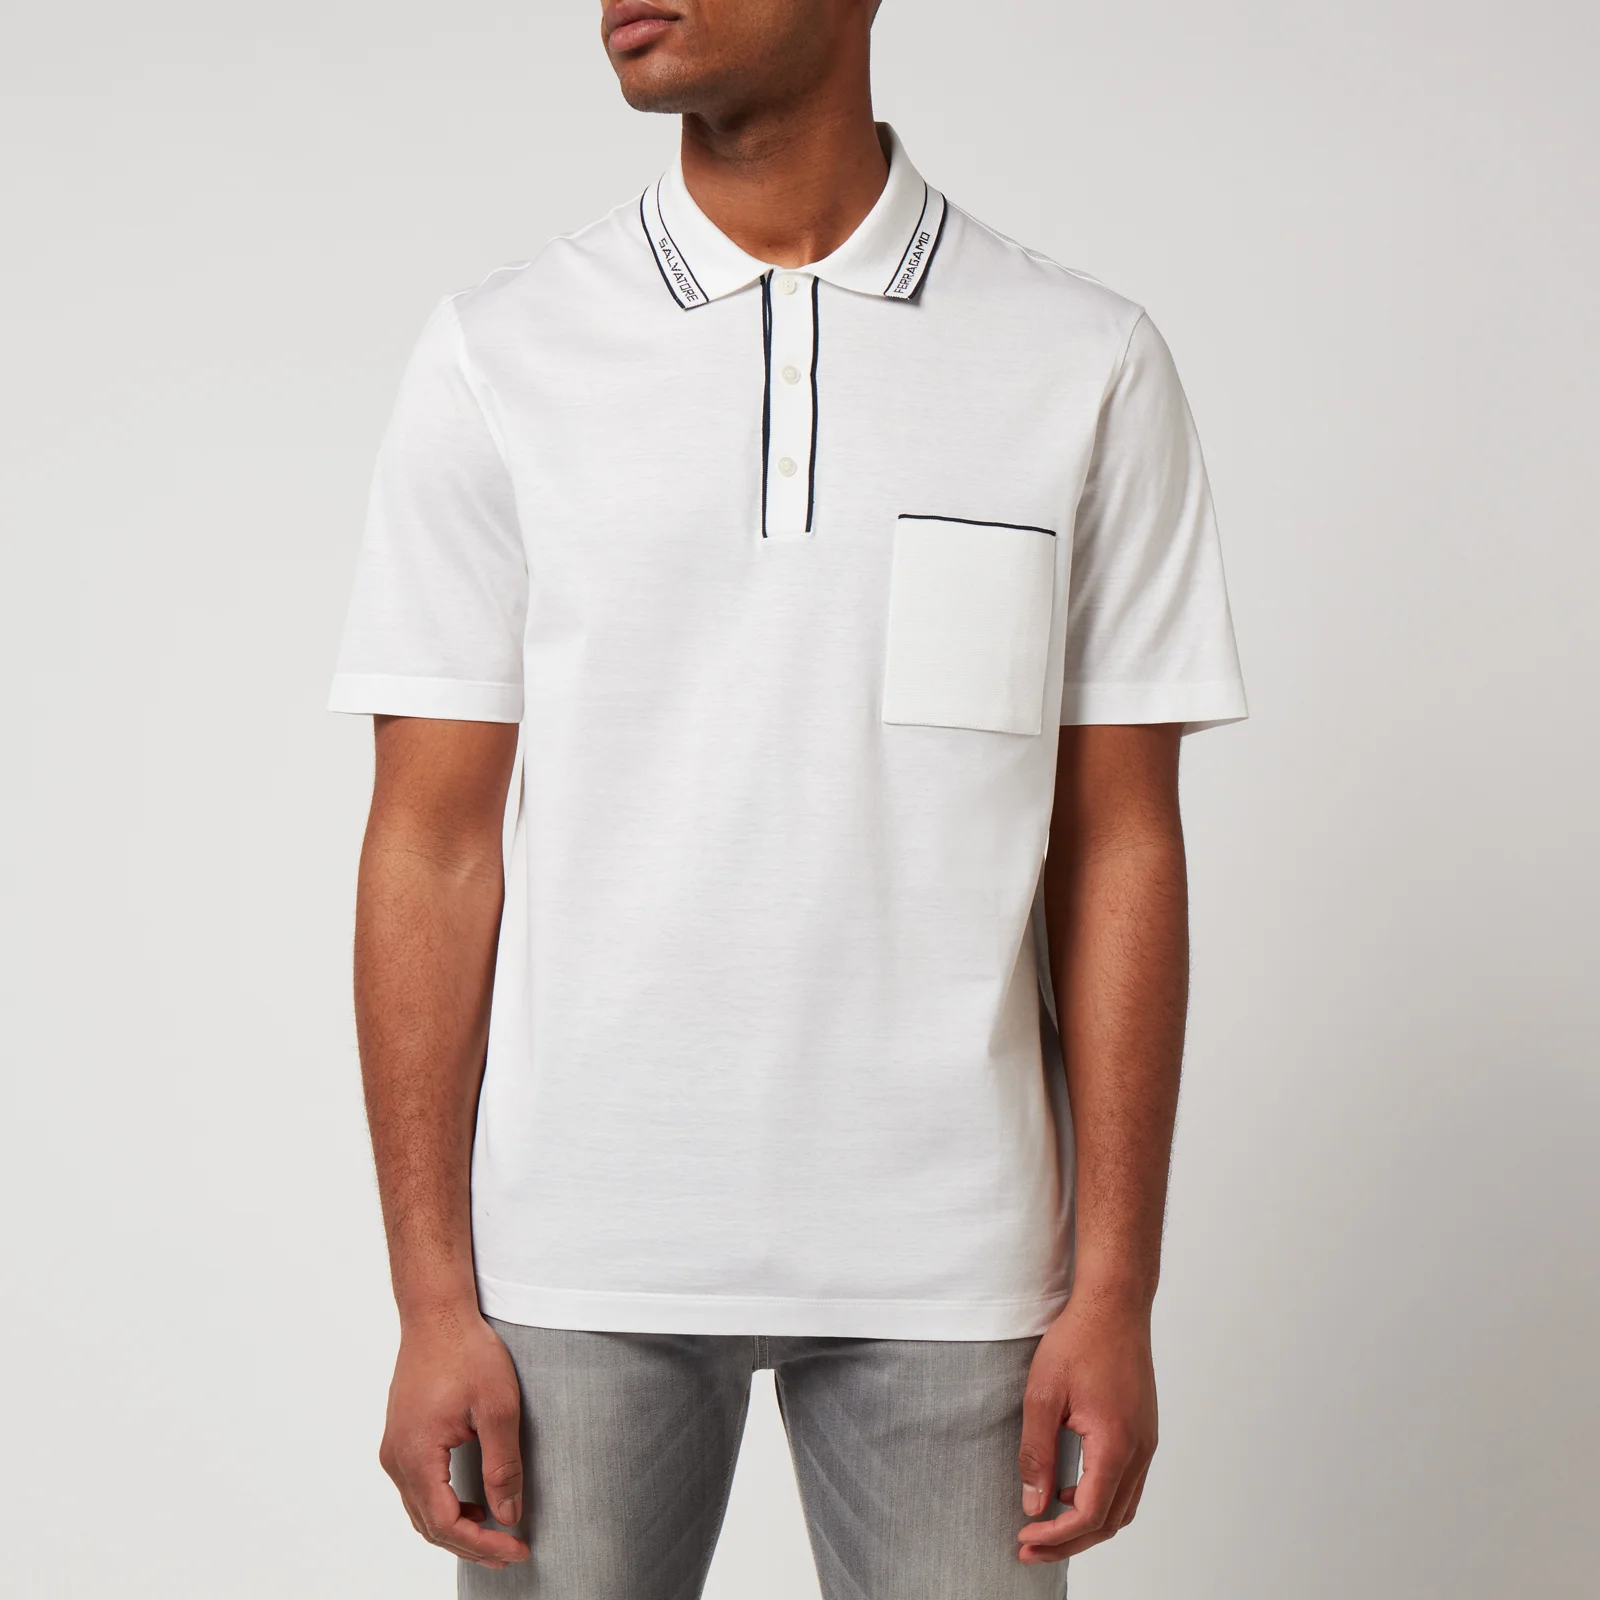 Ferragamo Men's Branded Collar Polo Shirt - White Image 1